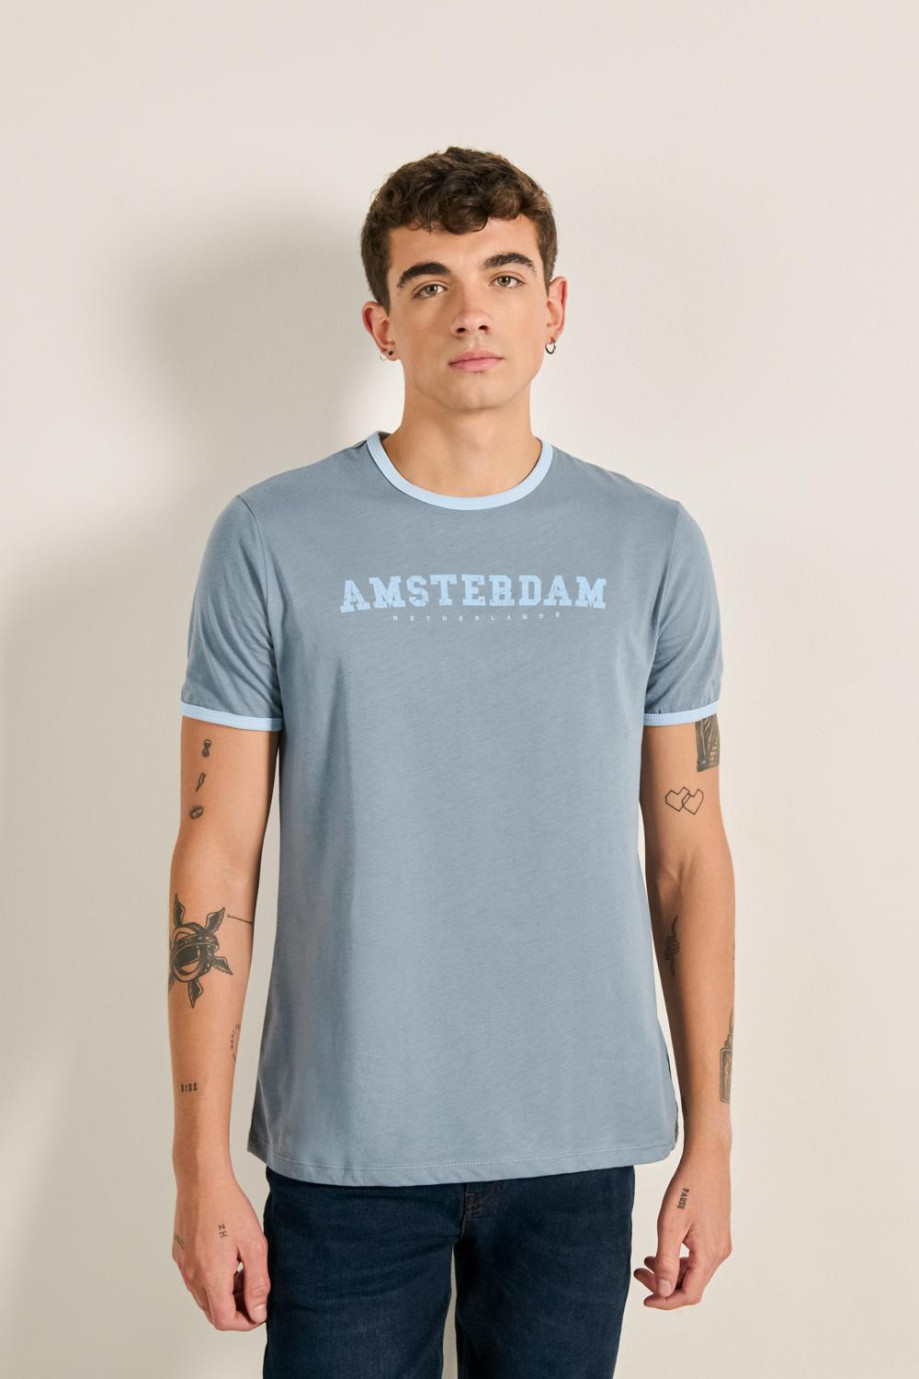 Camiseta azul manga corta con contrastes y texto college